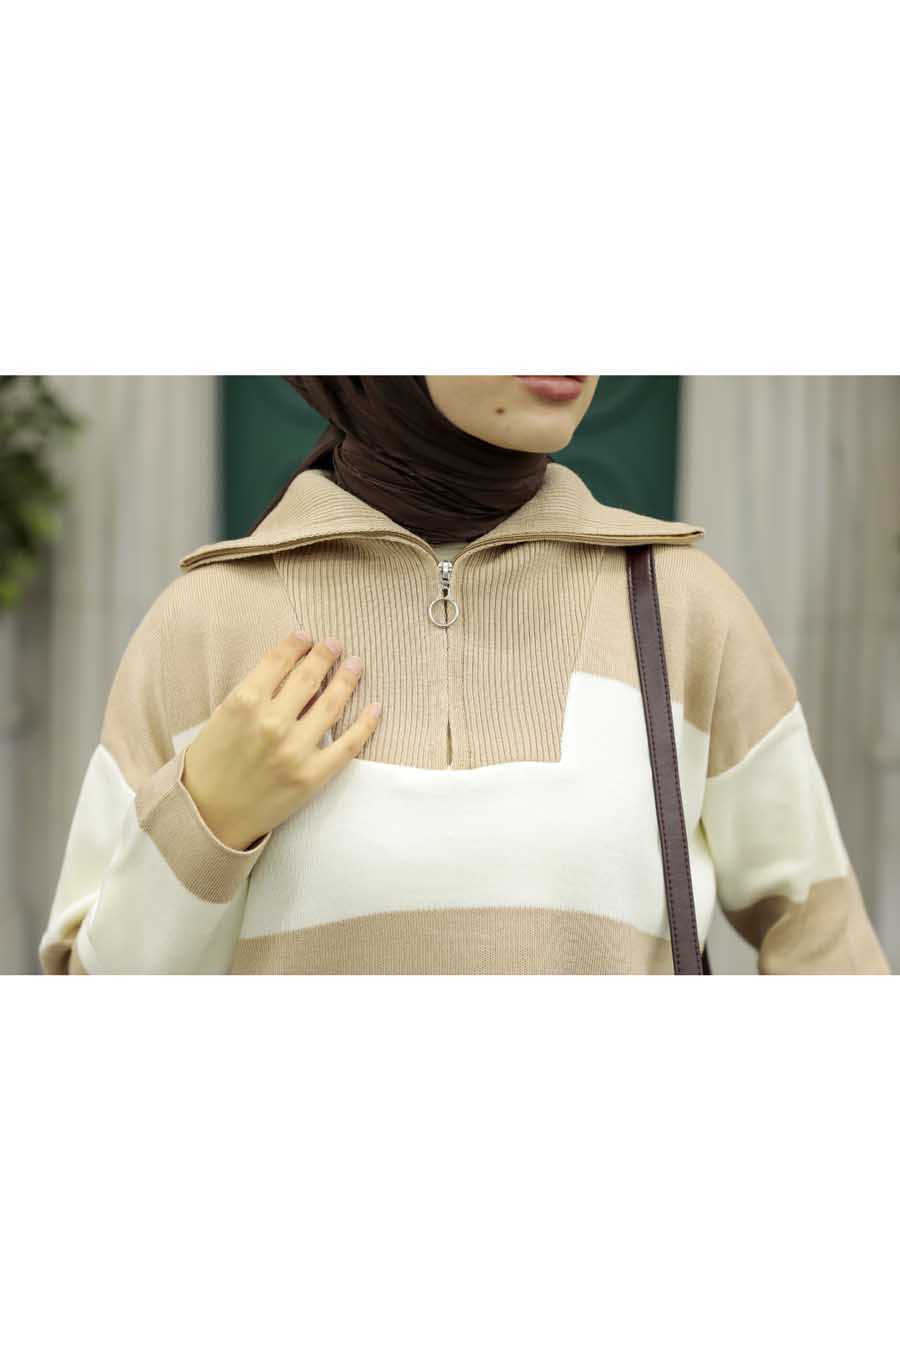 Neva Style - Beige Hijab Knitwear Tunic 27021BEJ